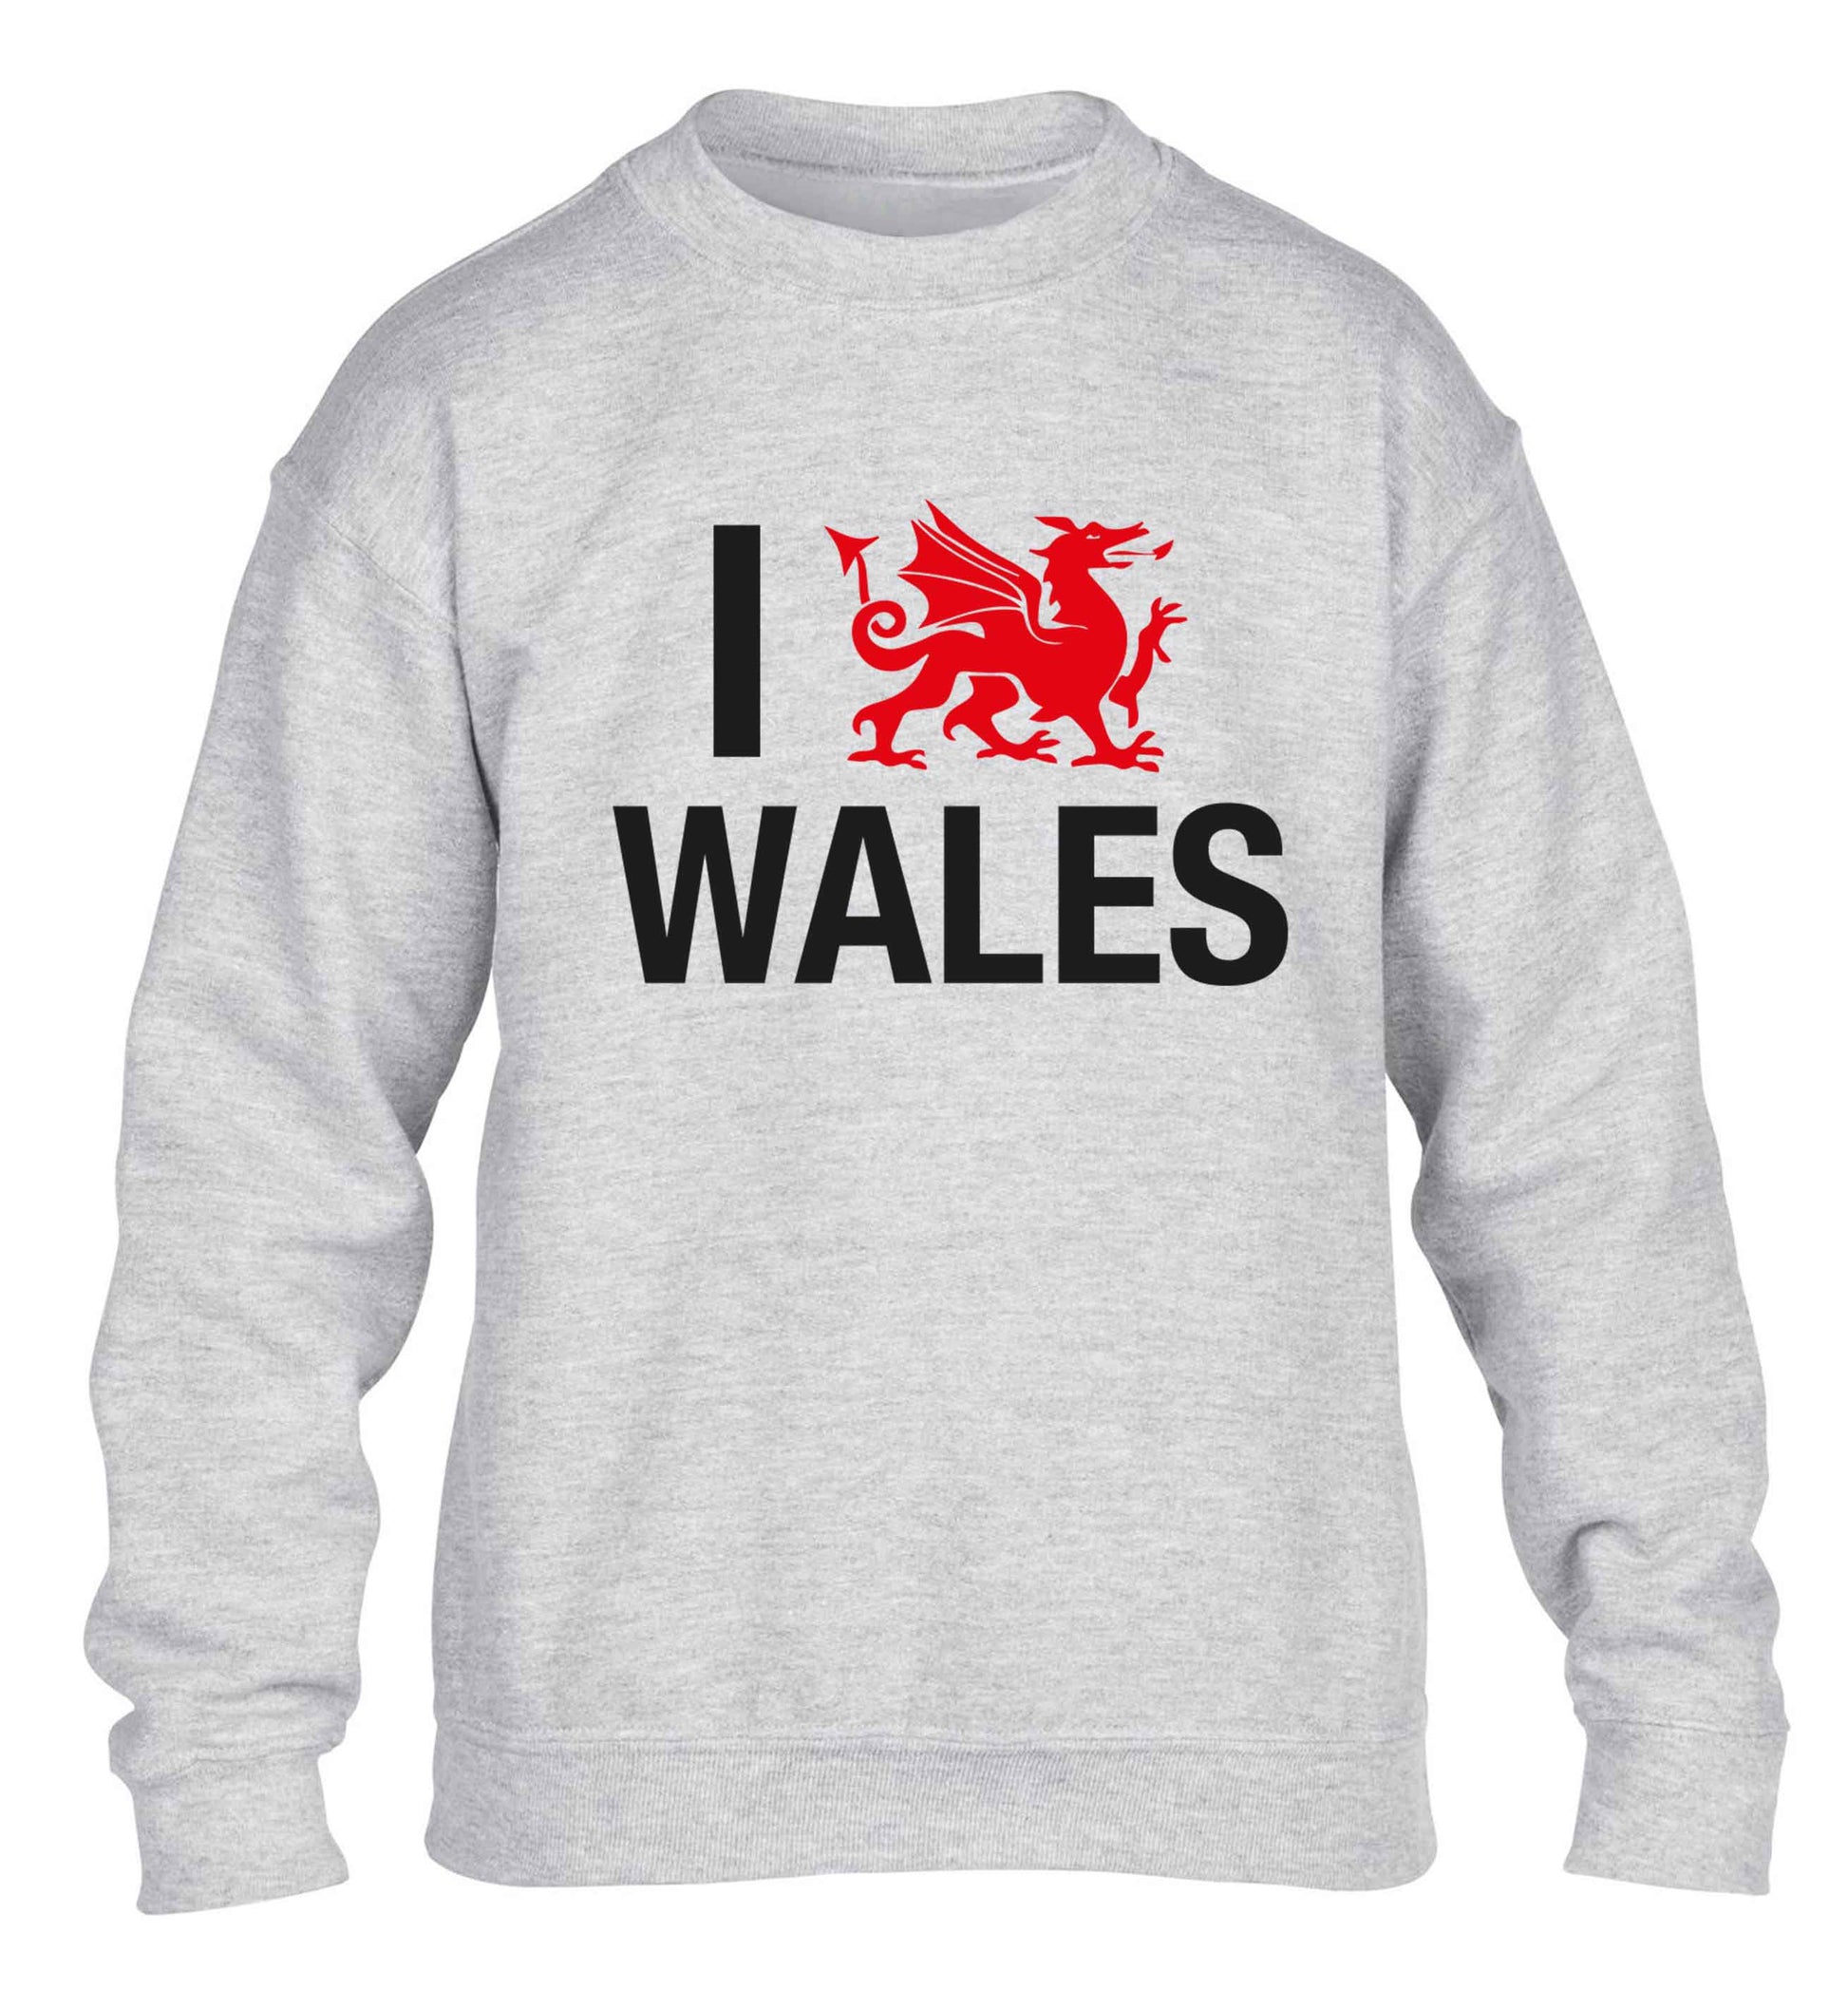 I love Wales children's grey sweater 12-13 Years